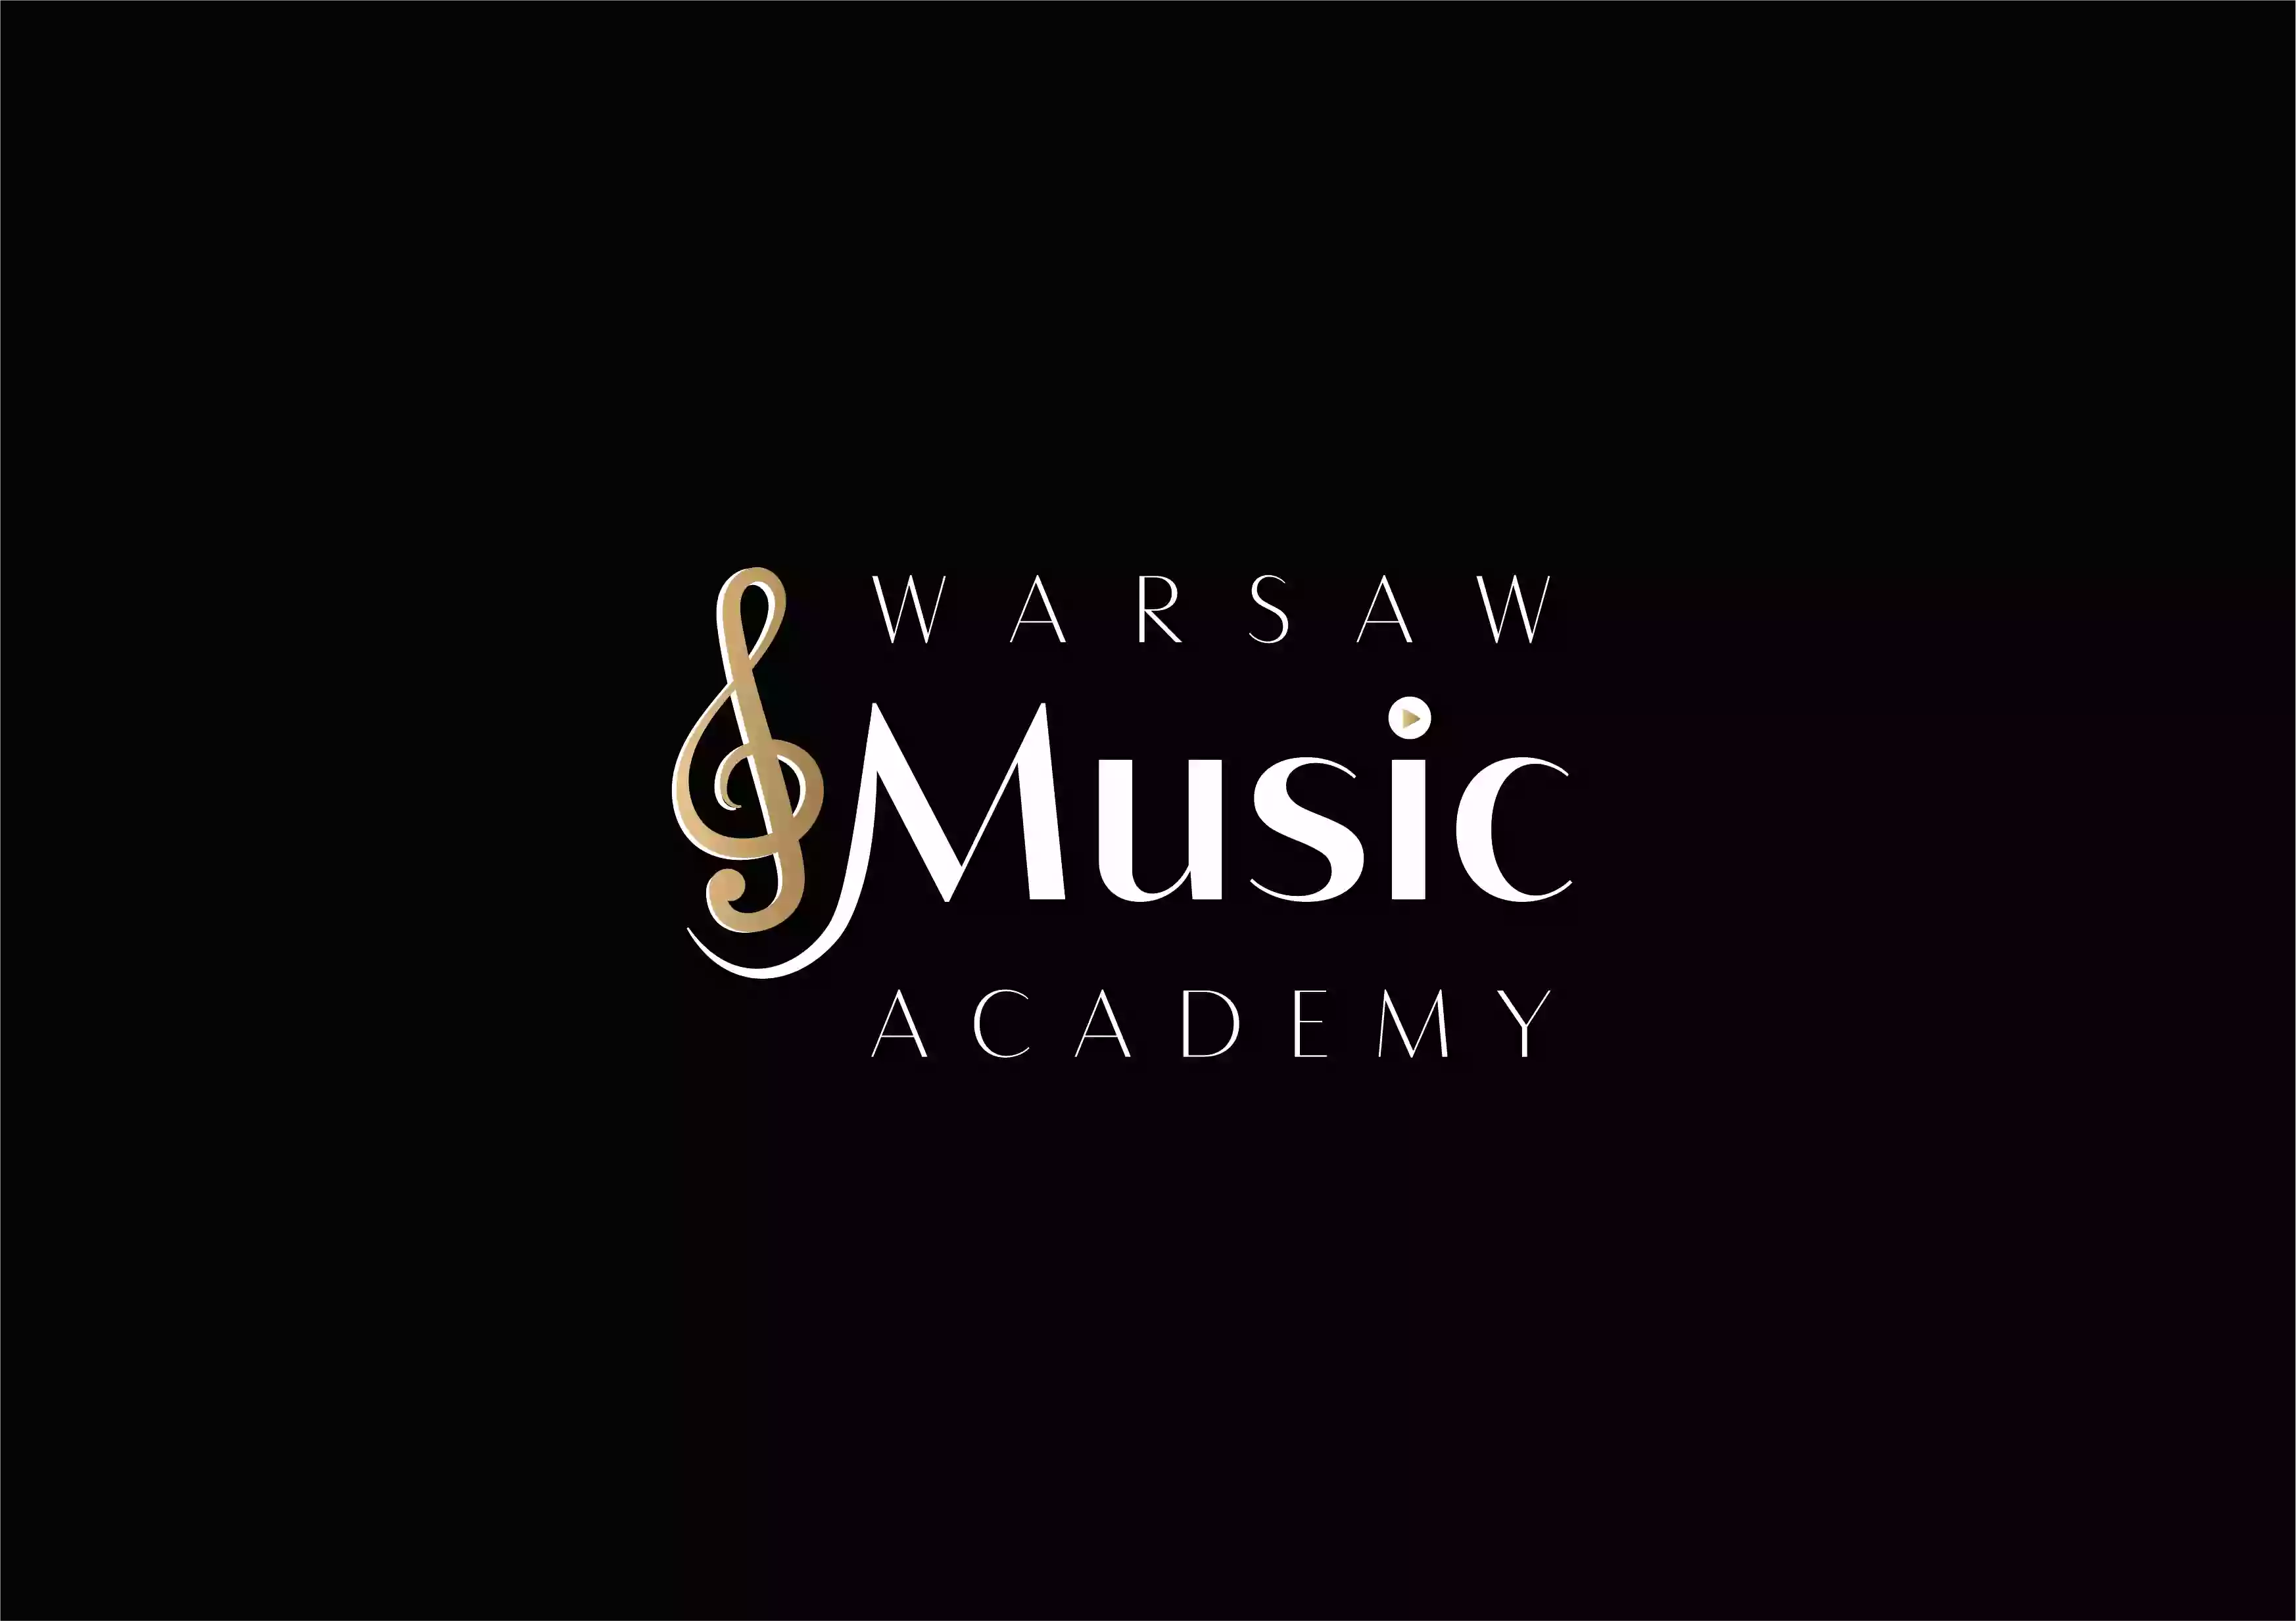 Warsaw Music Academy